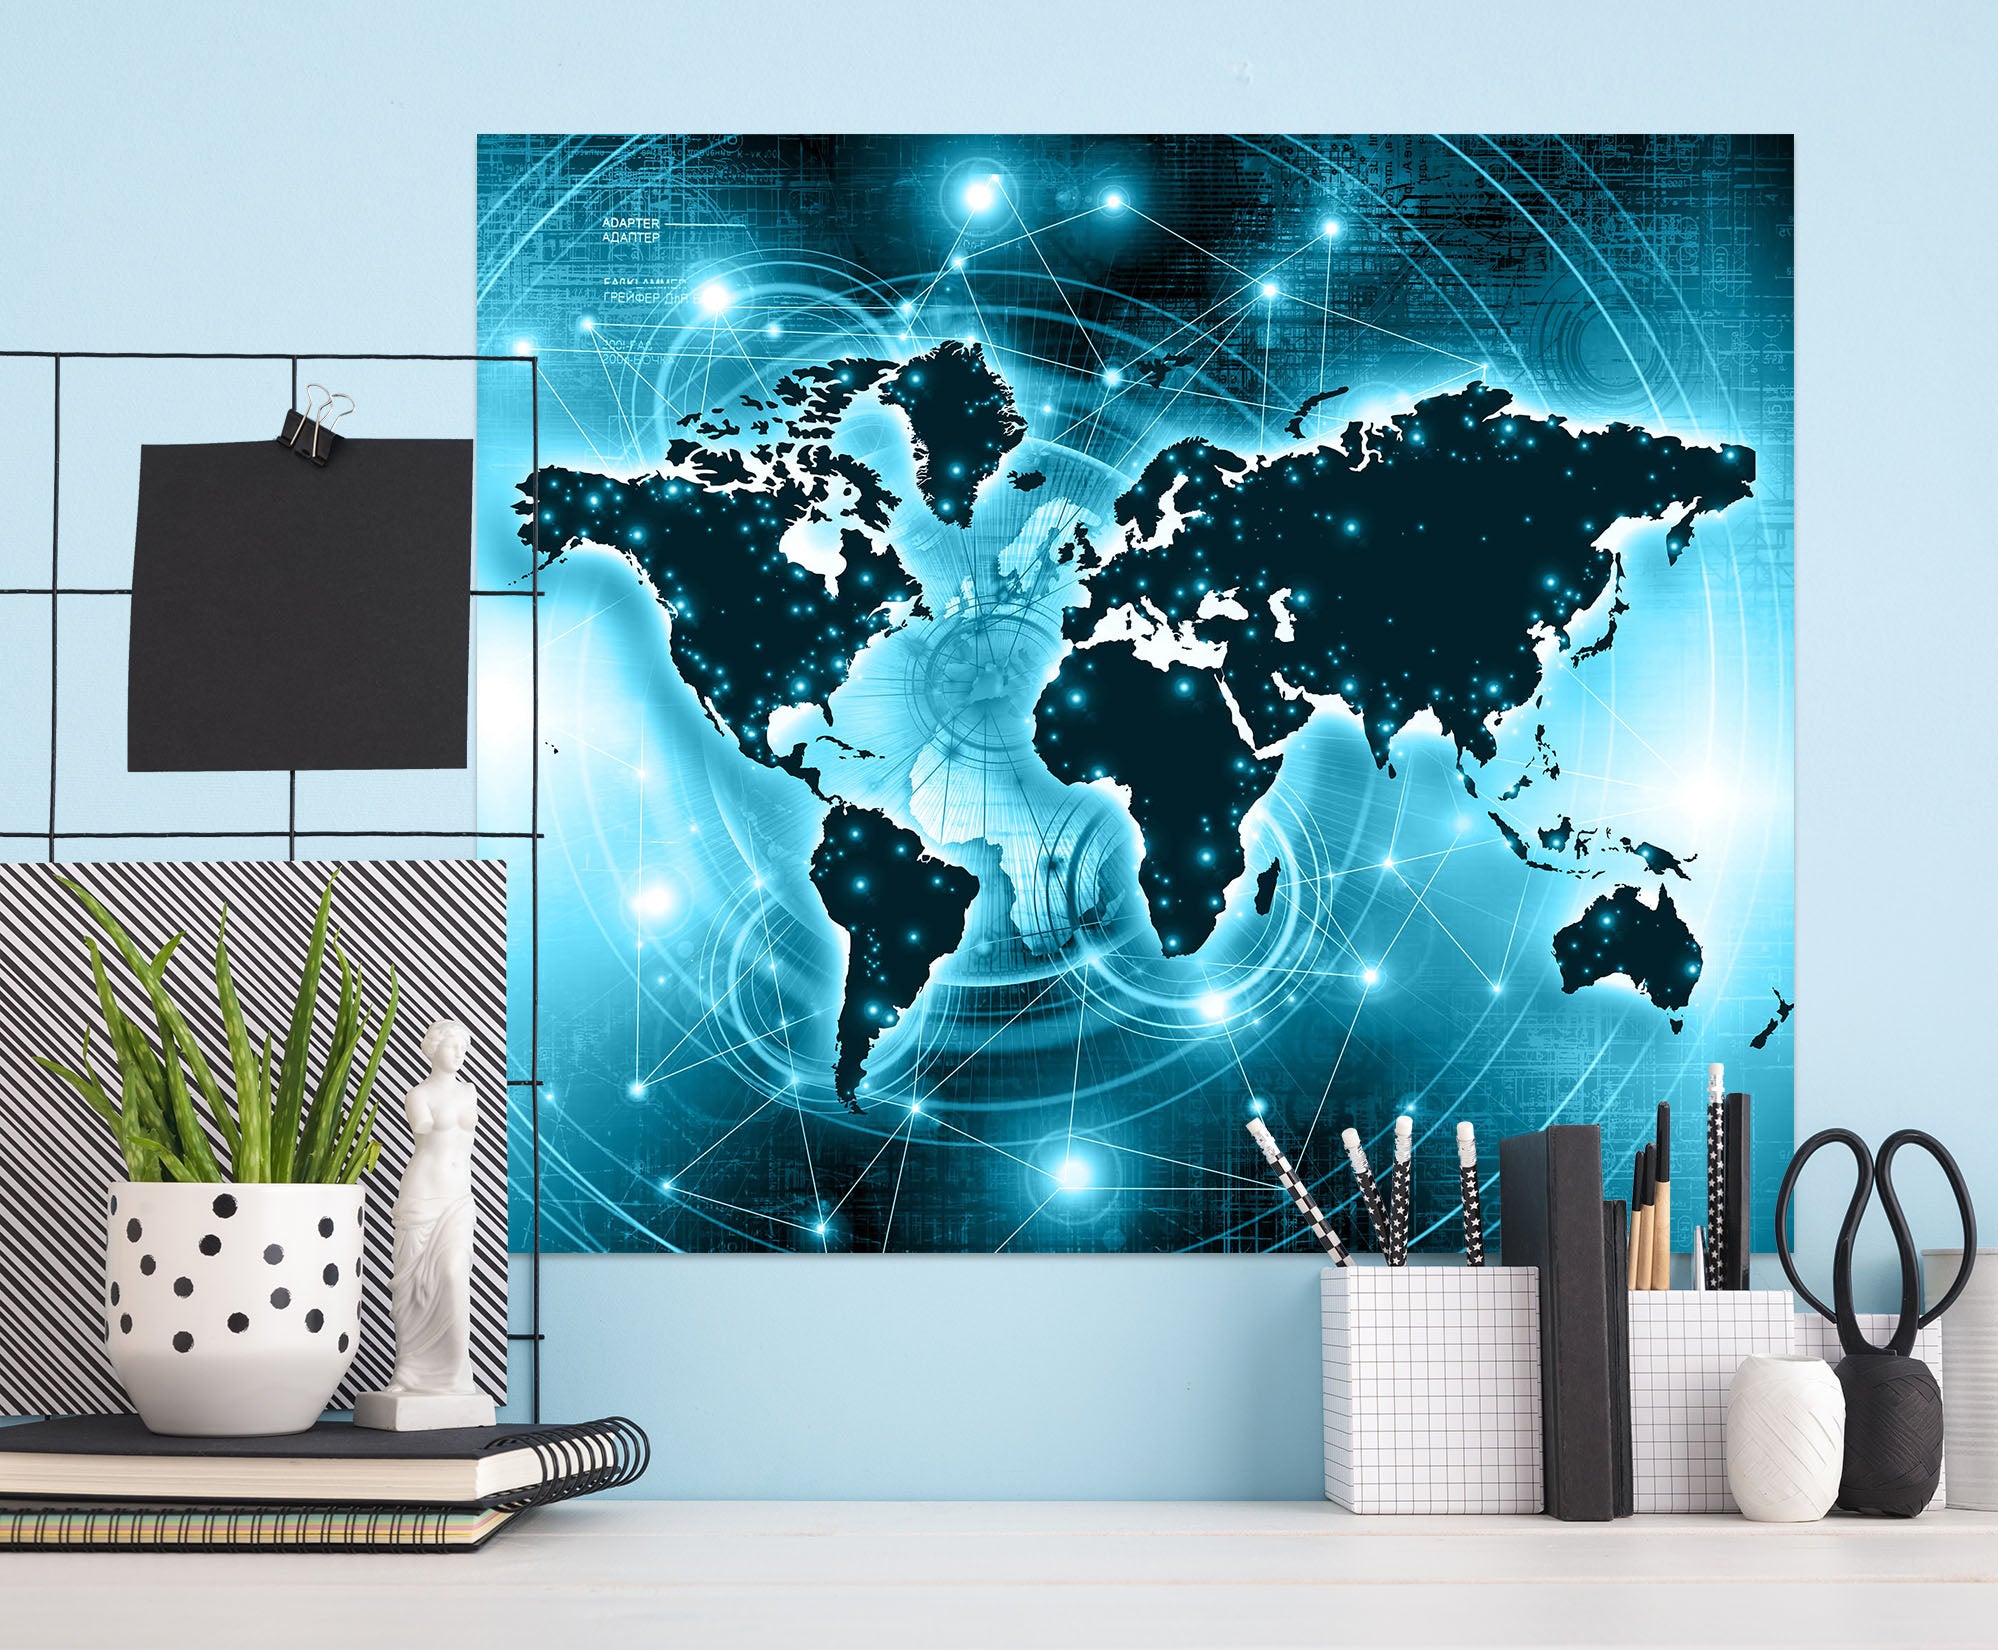 3D Blue Rays 235 World Map Wall Sticker